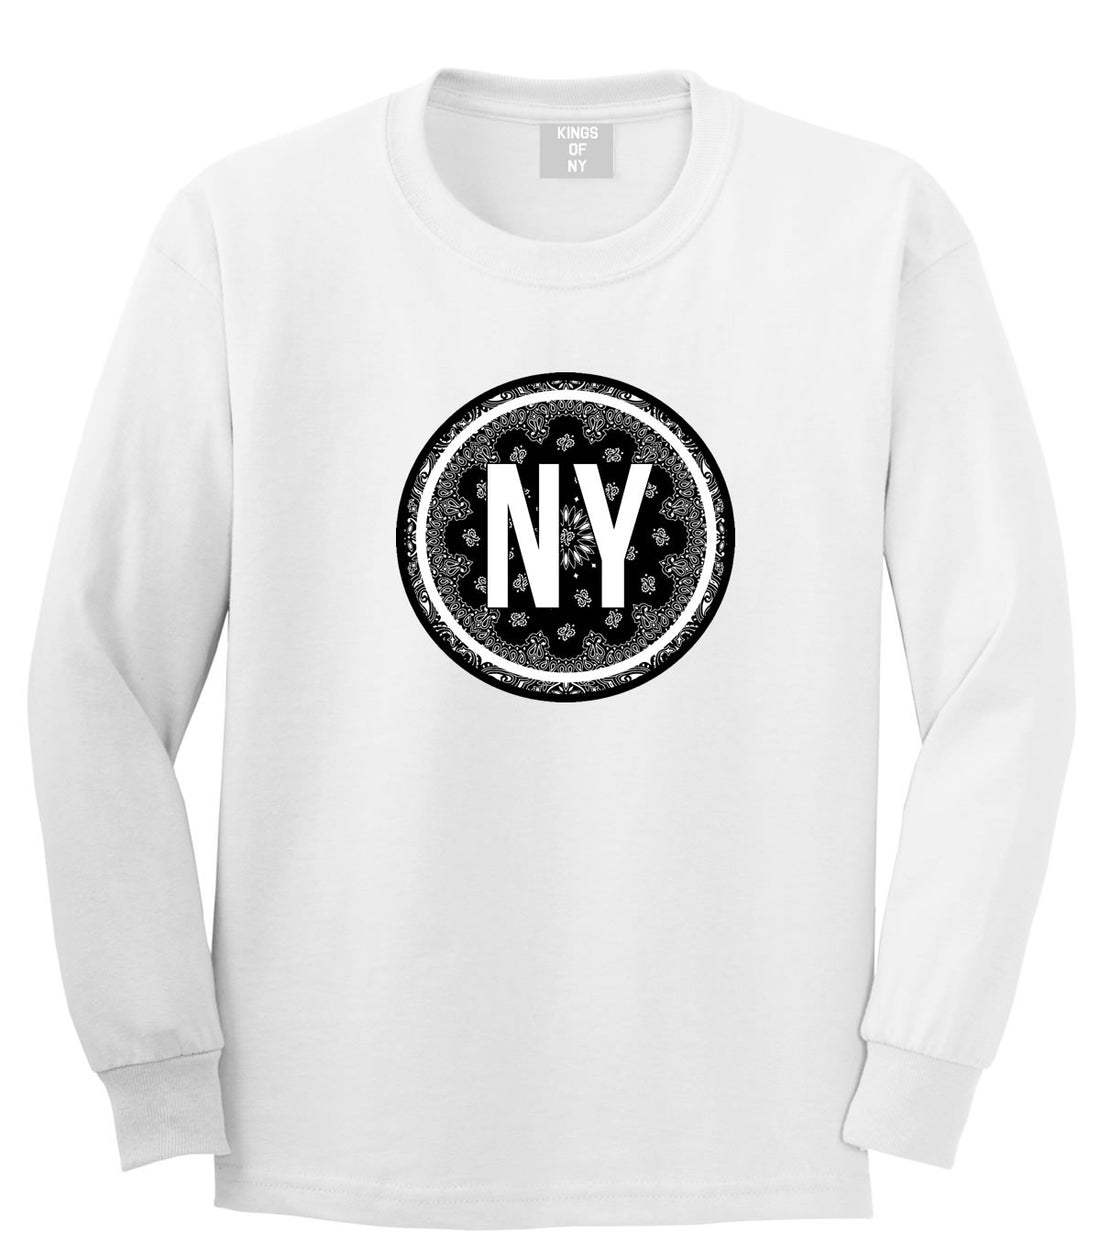 Kings Of NY New York Bandana Print NYC Long Sleeve T-Shirt in White